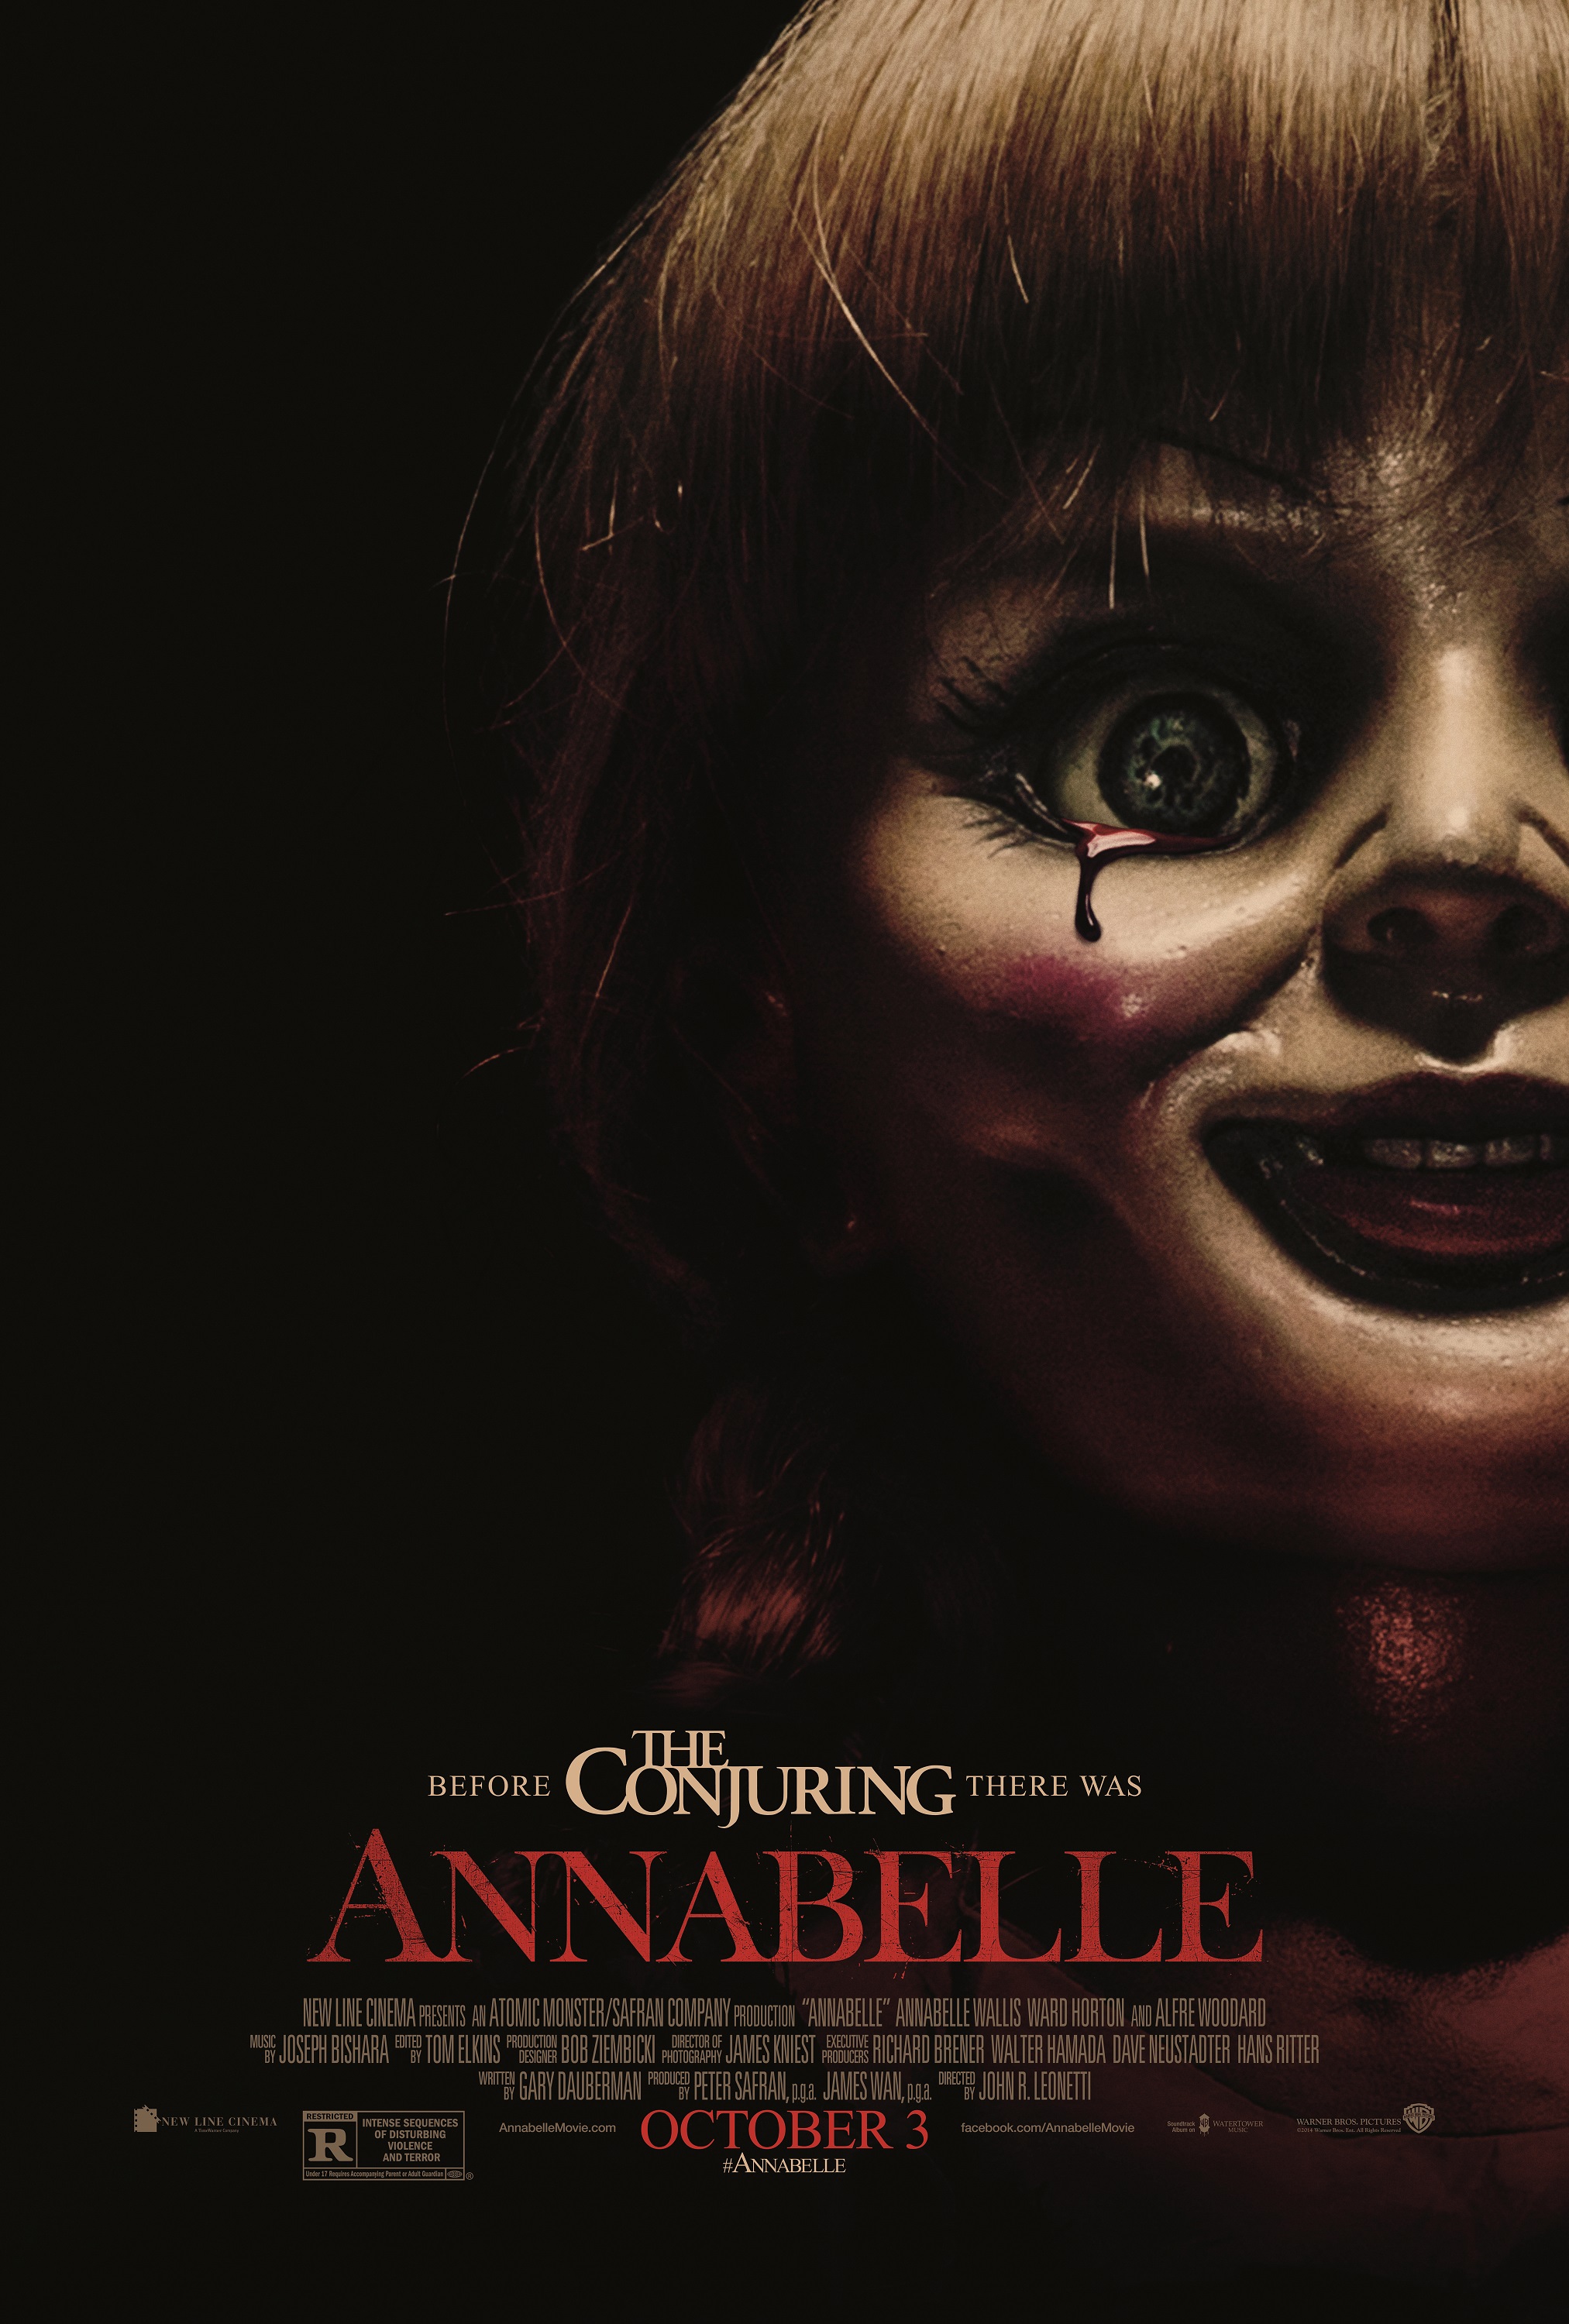 Annabelle the Movie